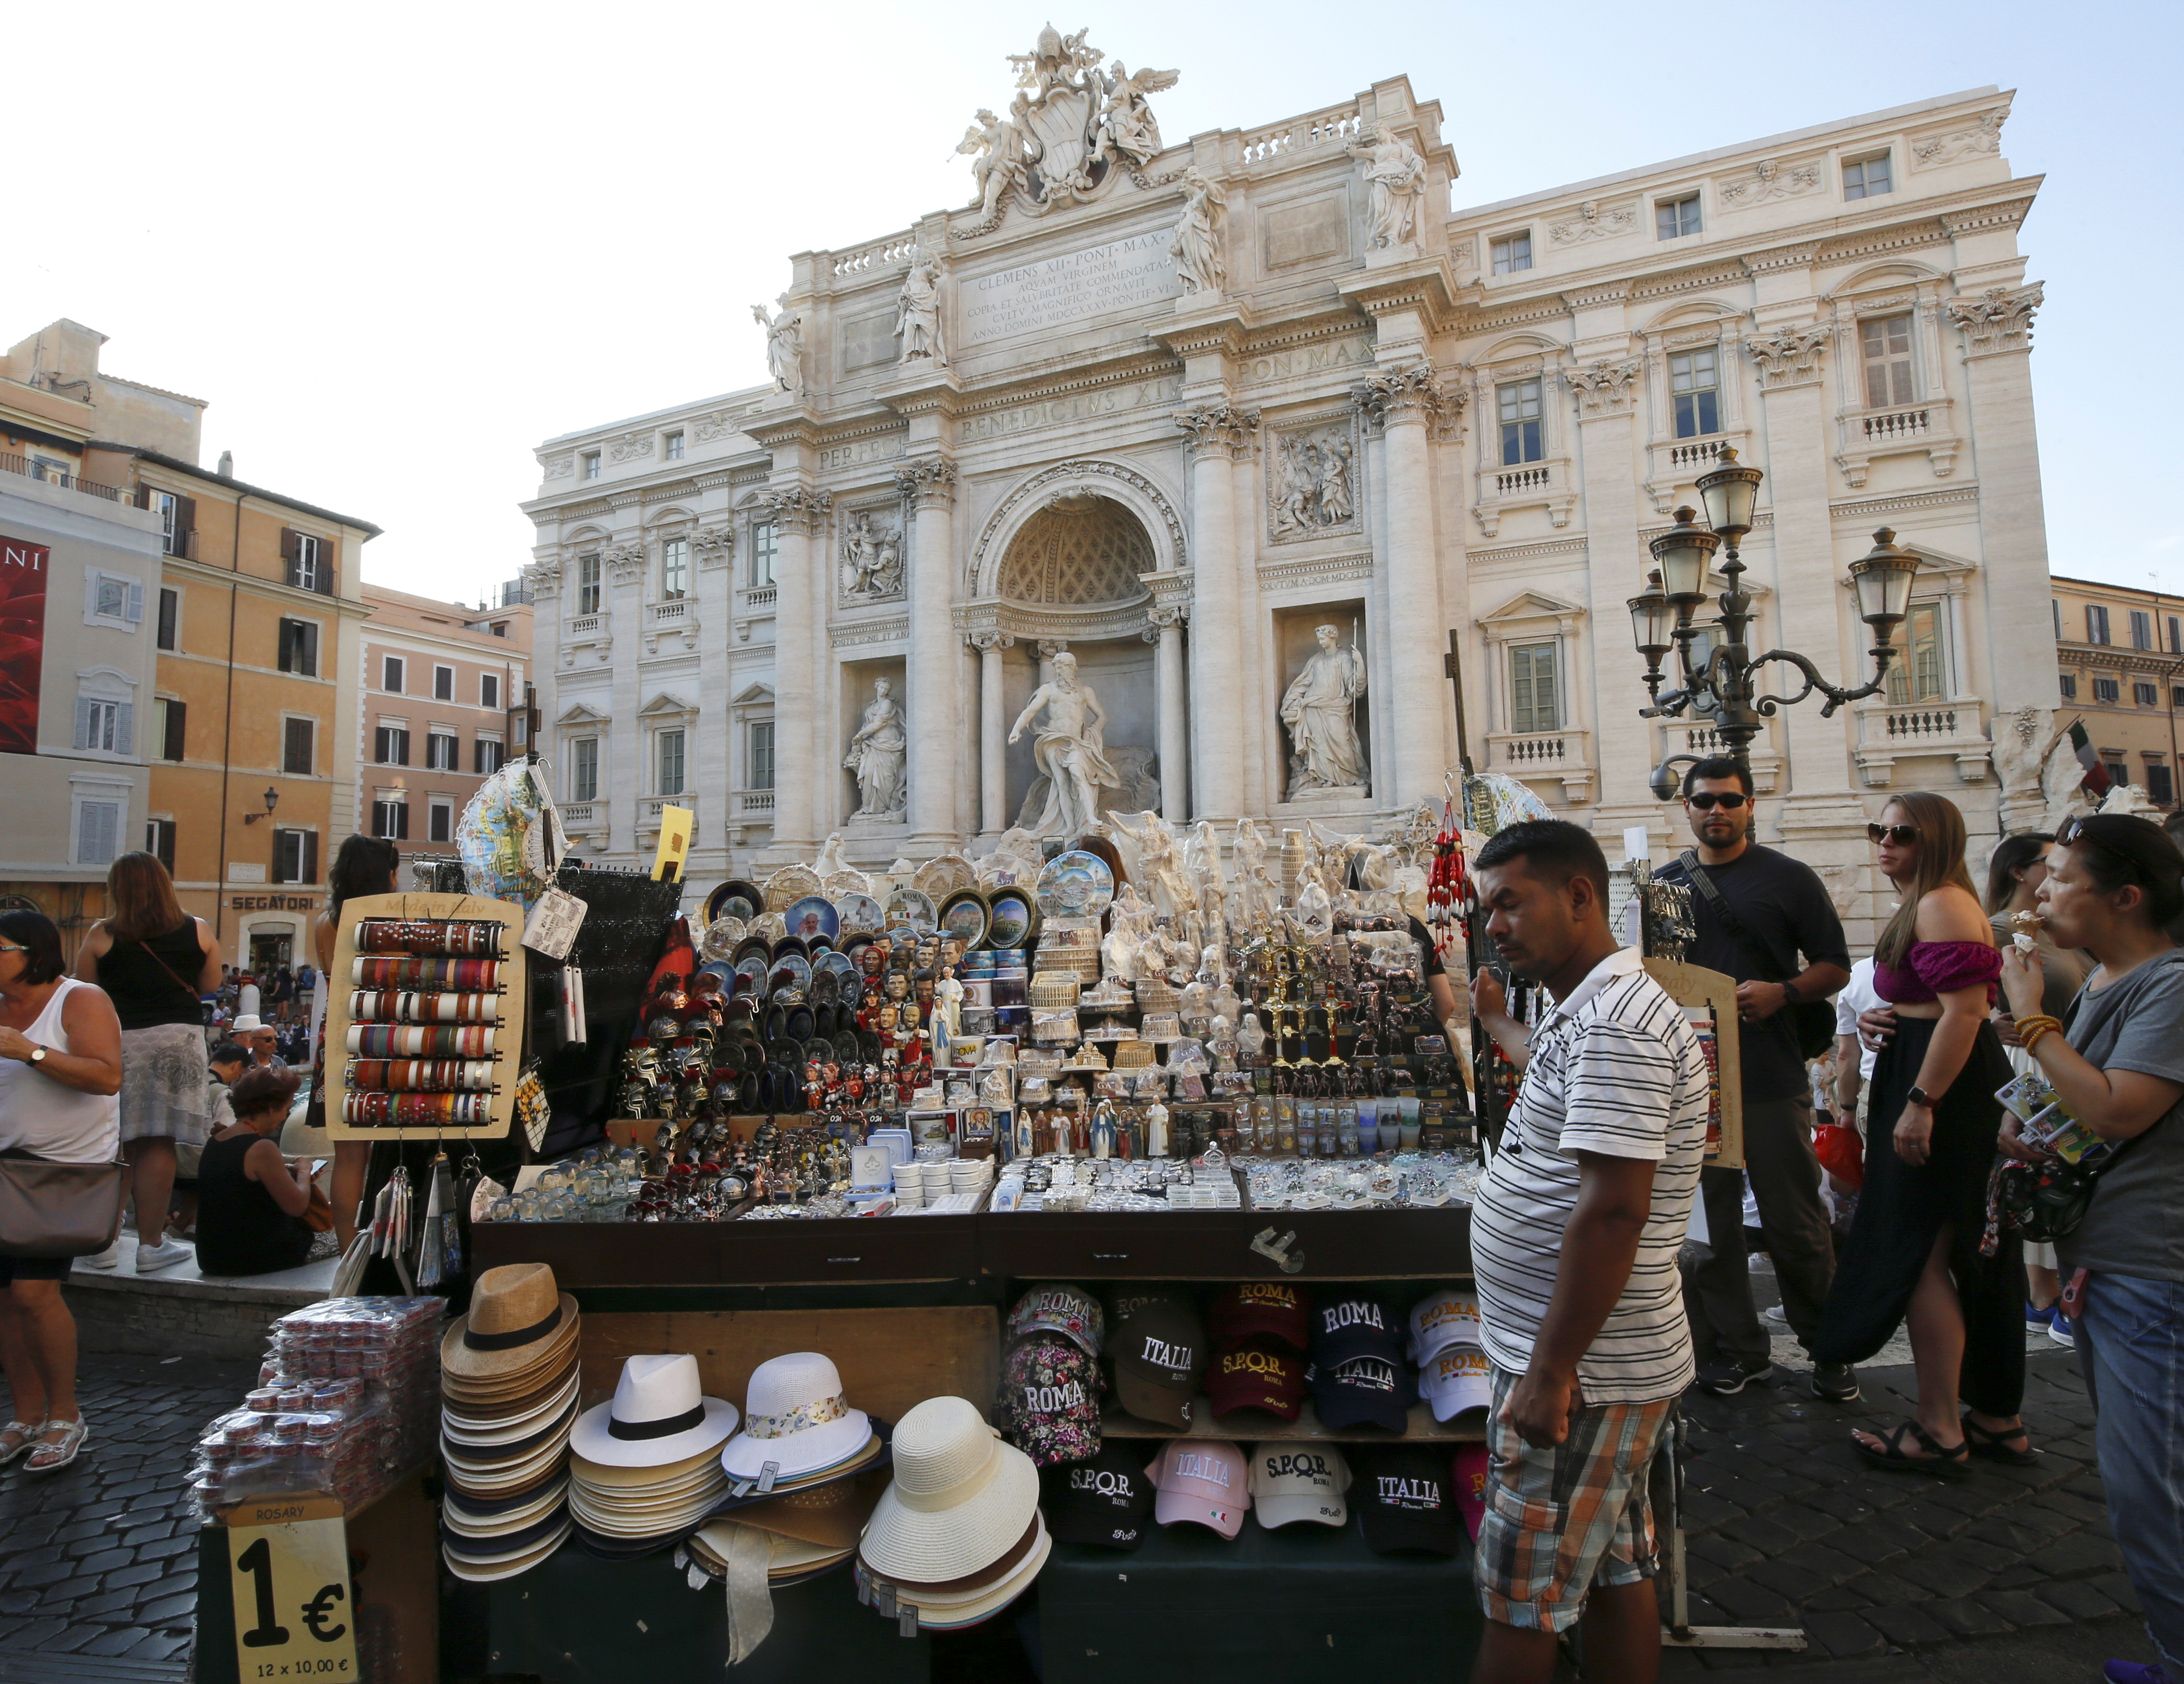 A vendor sells souvenirs at Trevi Fountain in Rome